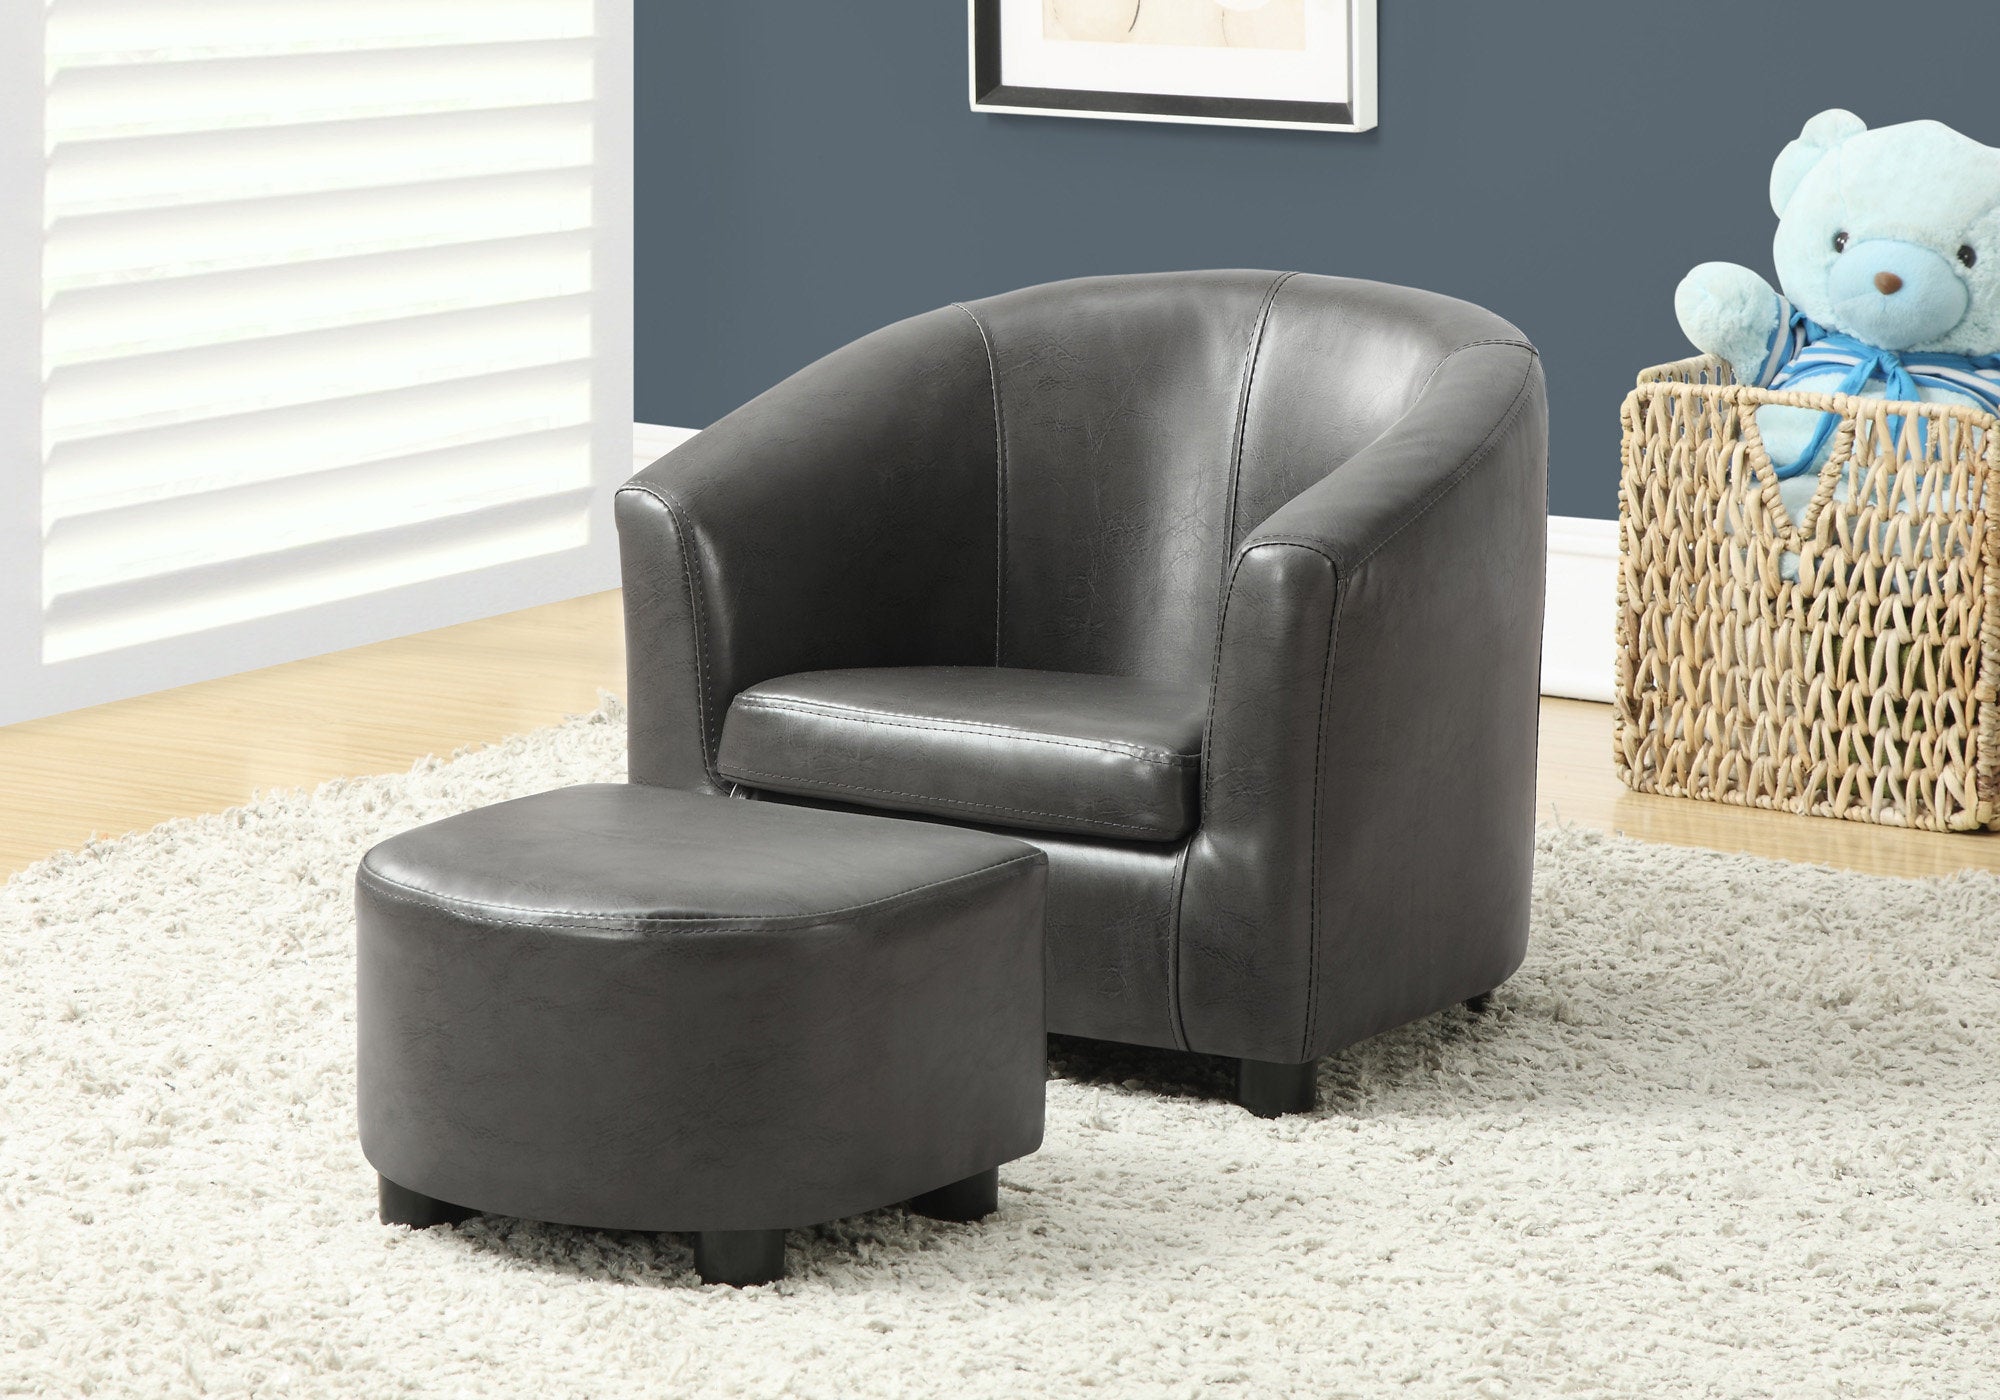 juvenile chair 2 pcs set charcoal grey leather look i8109